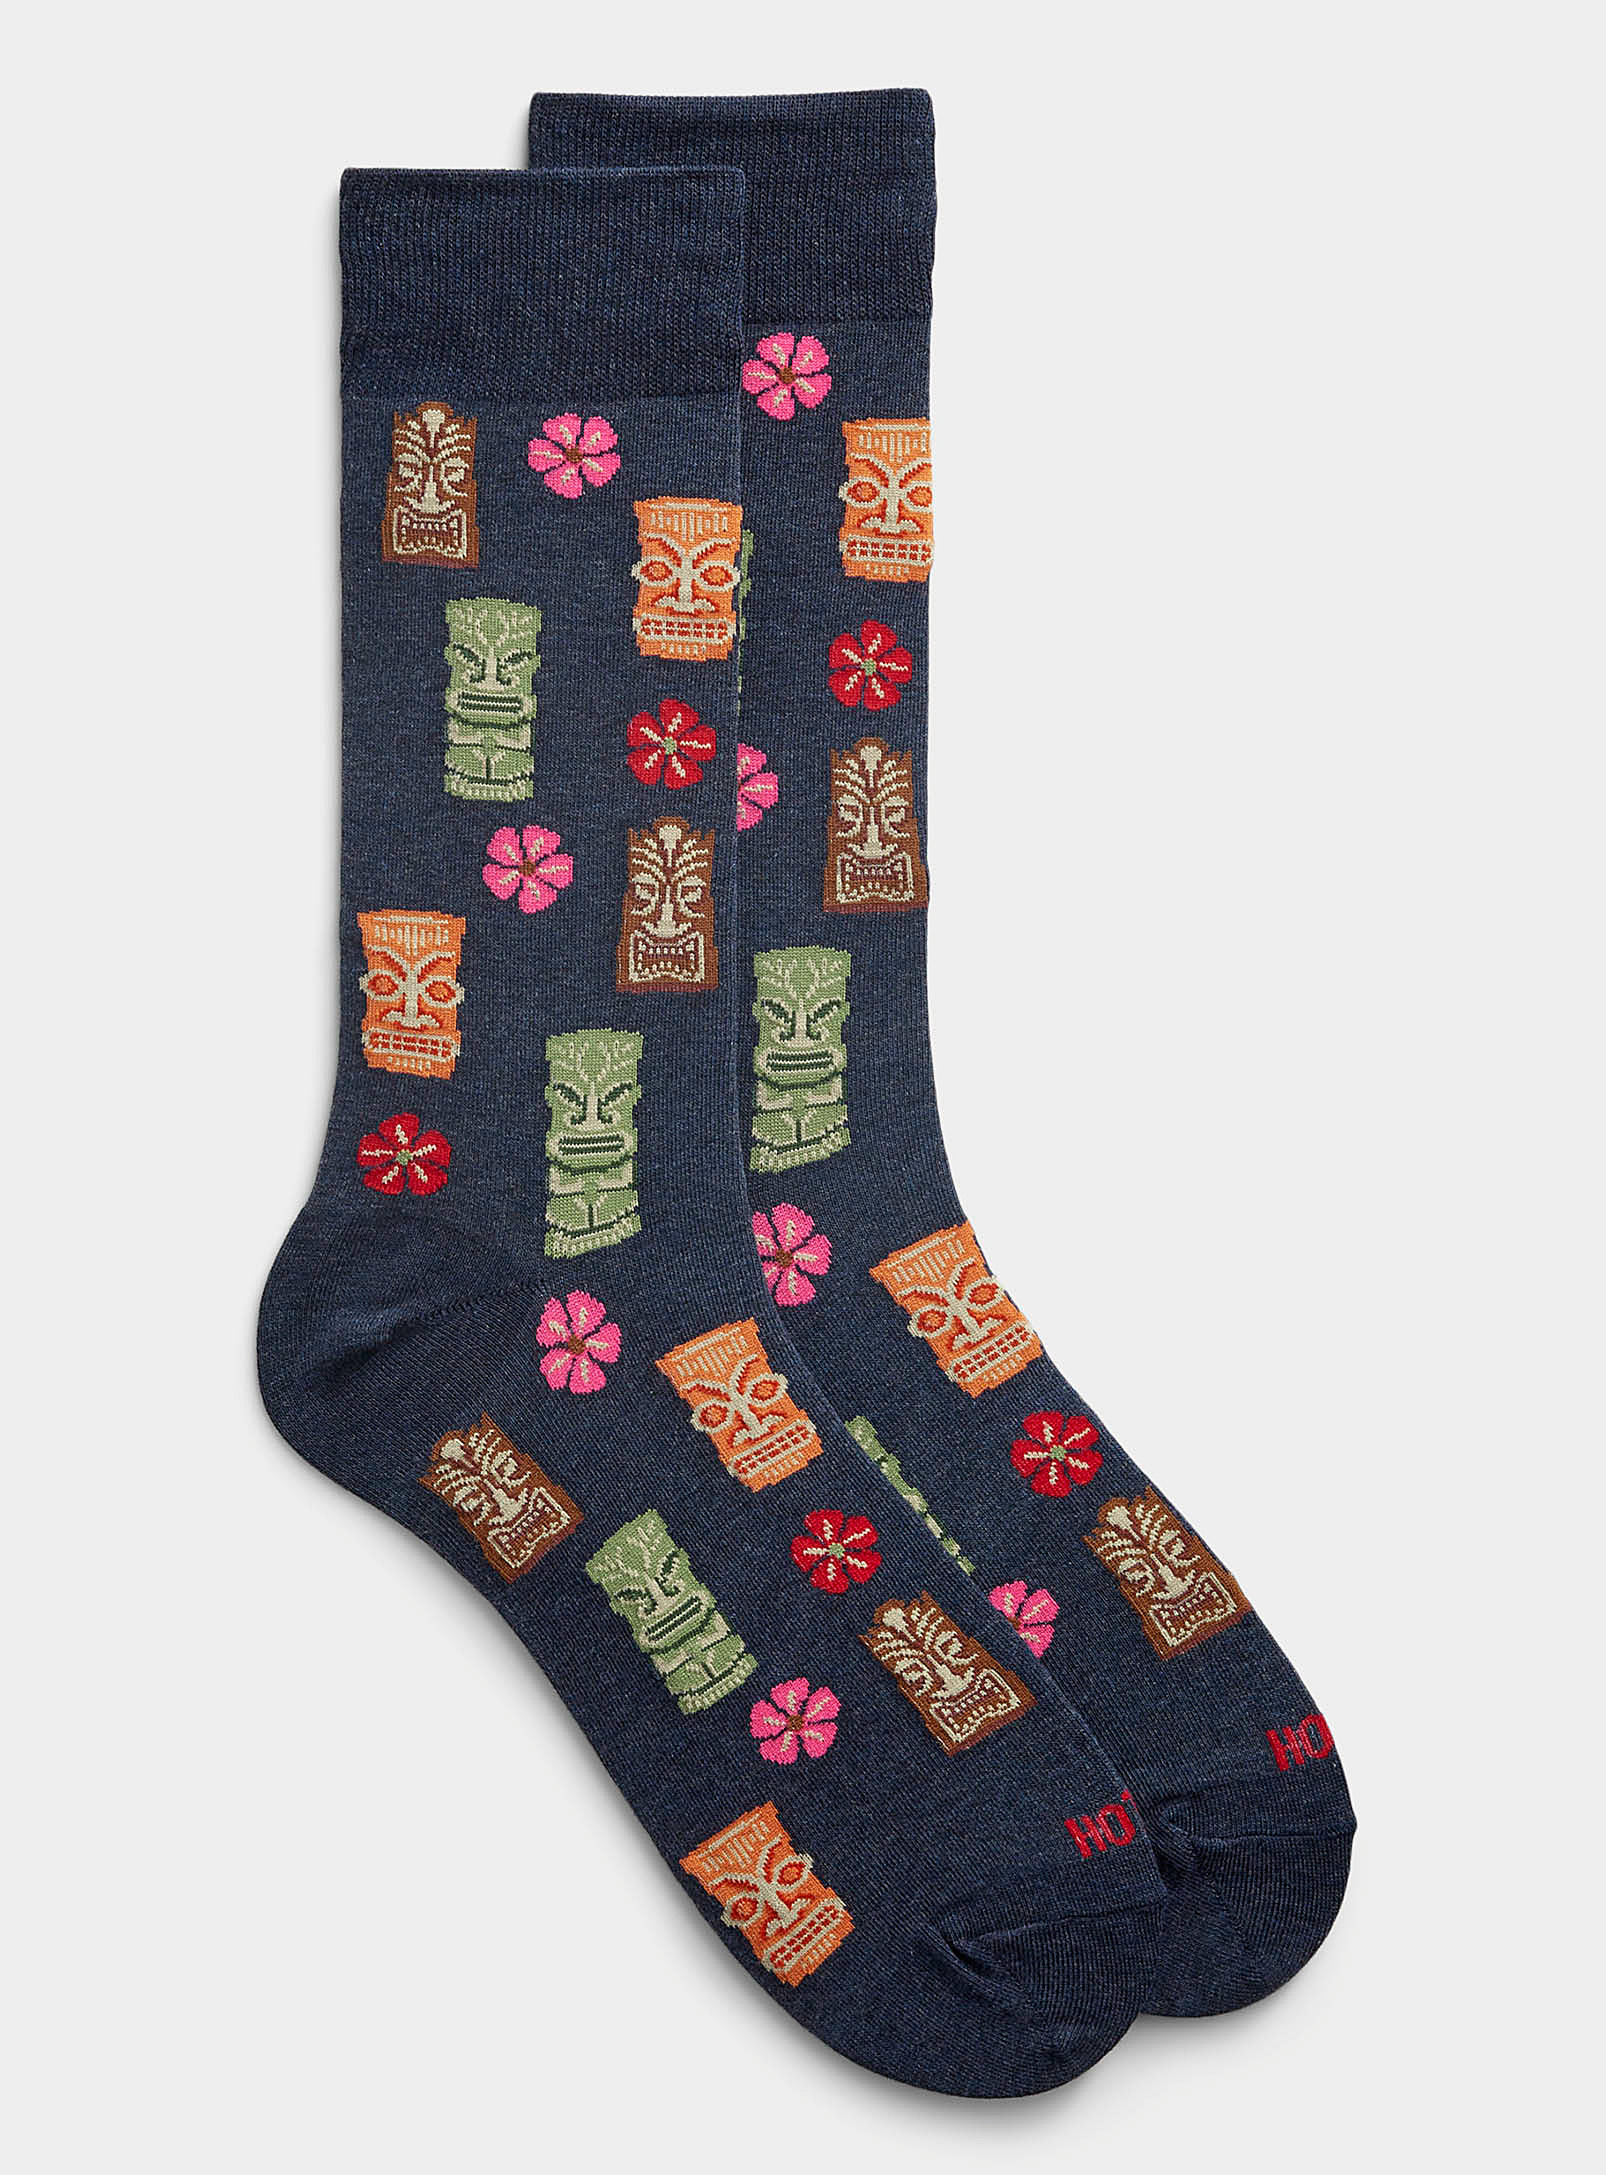 Hot Sox - Men's Colourful Tiki sock